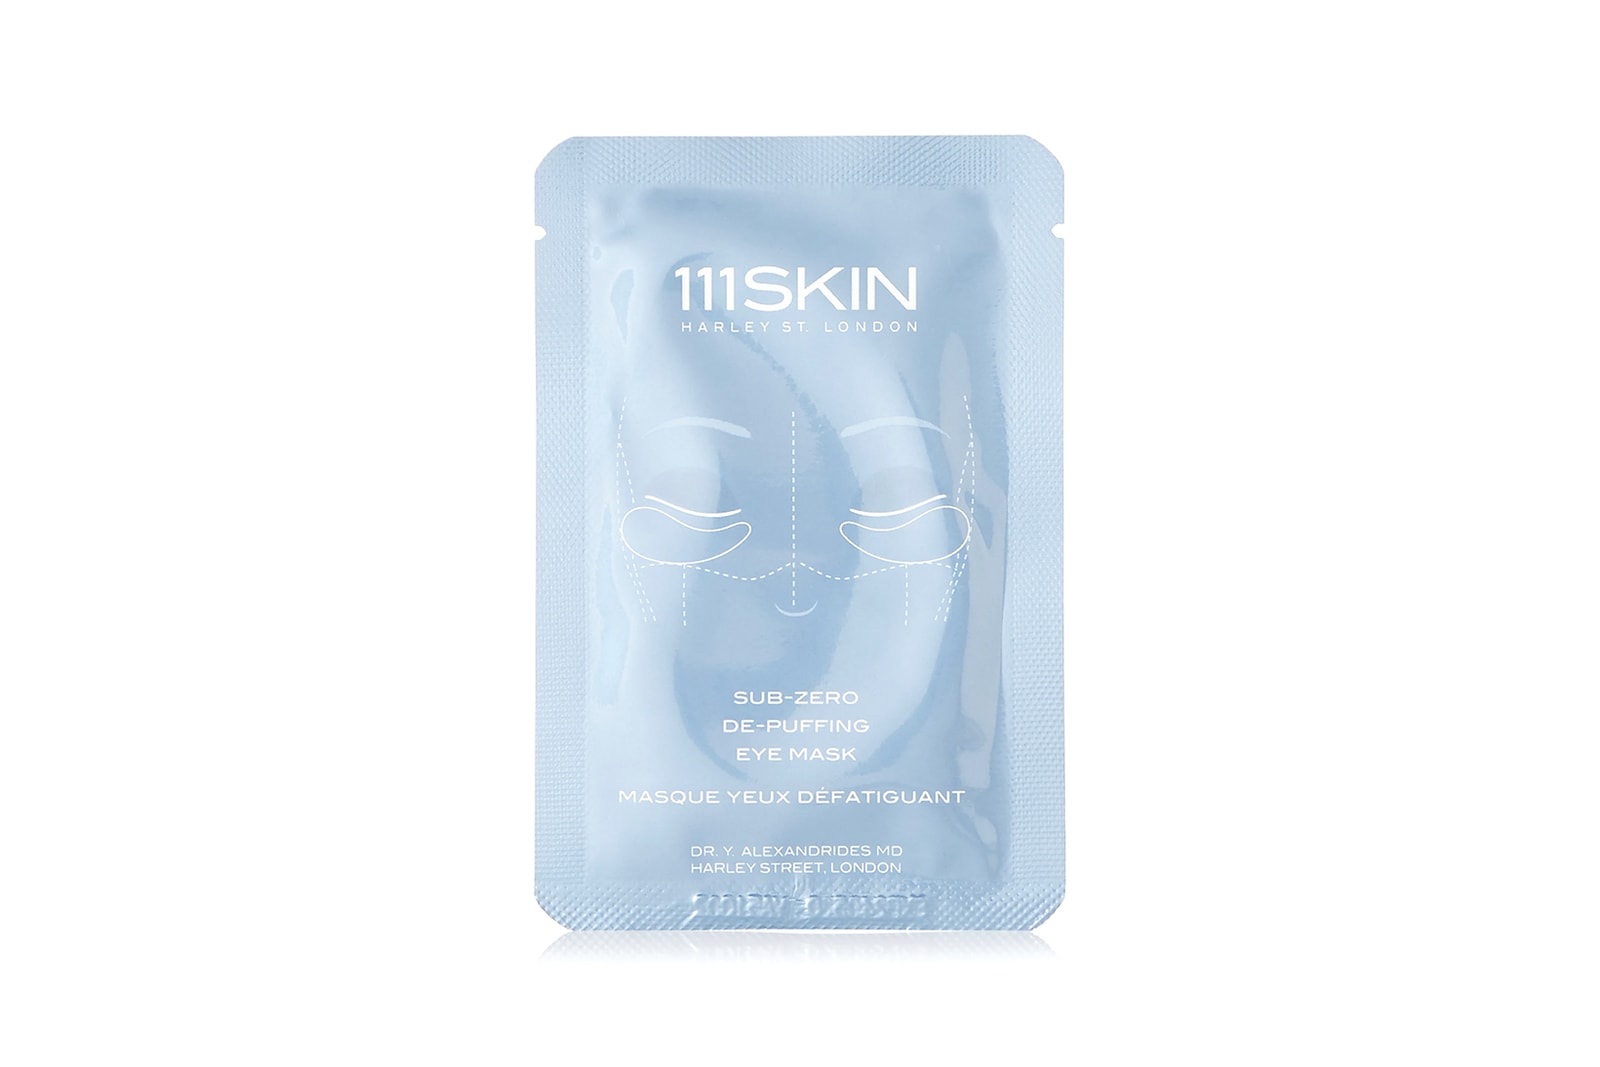 editor reviews products at home spa day 111skin eye face masks body oil jade roller tekla bathrobe